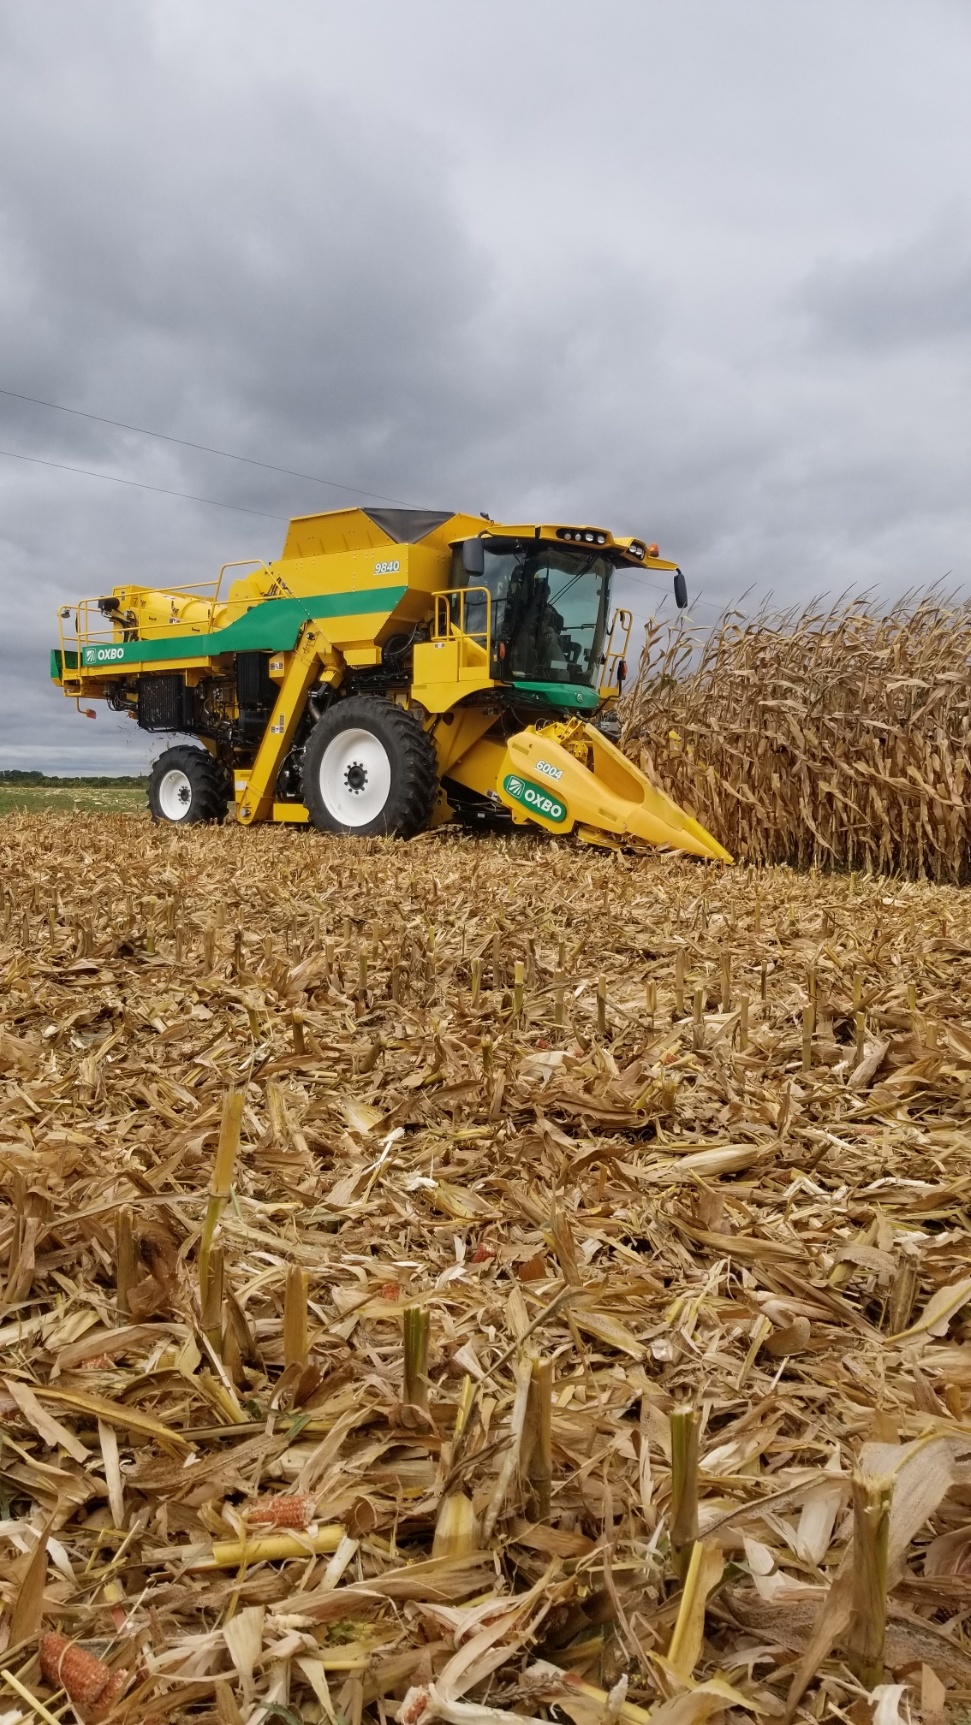 Oxbo combine harvesting corn